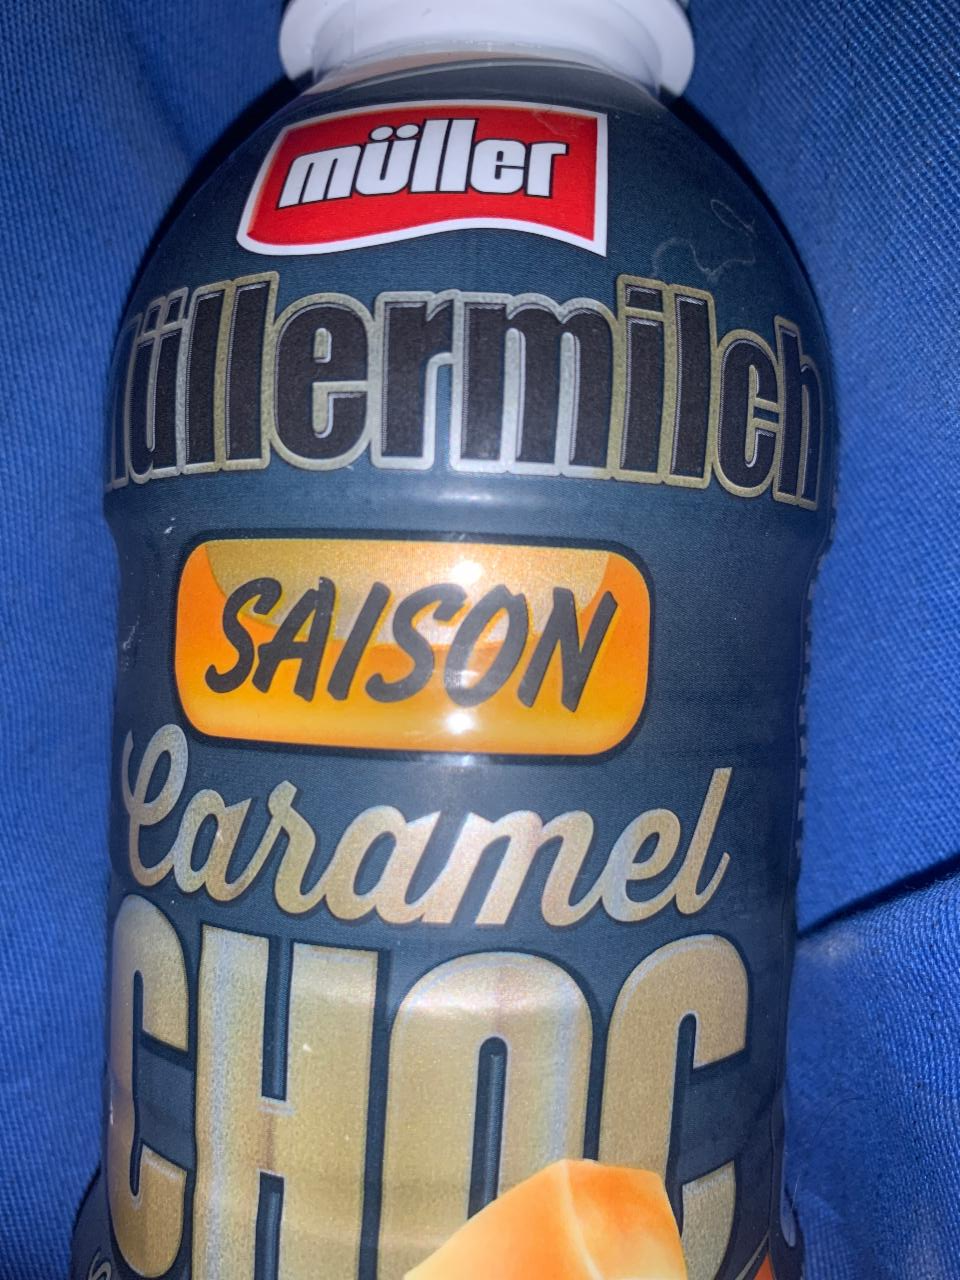 Fotografie - Müllermilch Saison Caramel Choc